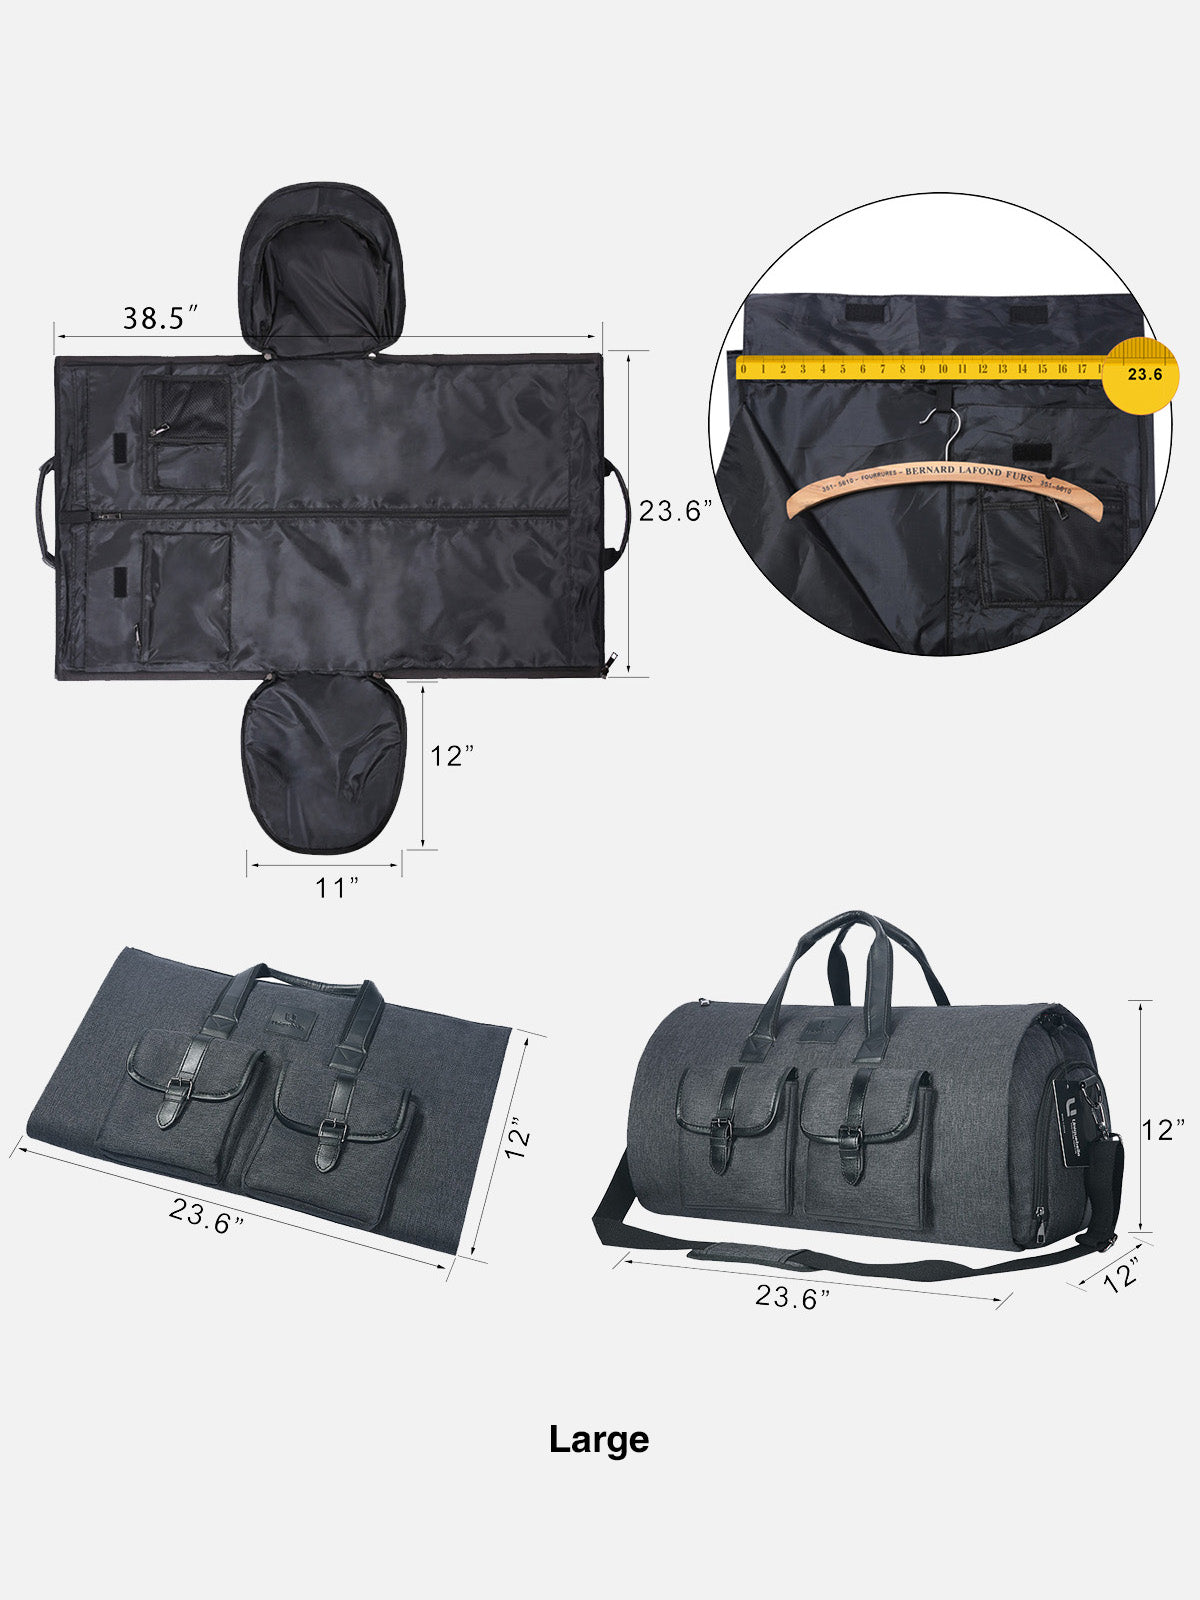 Carry-on Garment Bag Large Duffel Bag Suit Travel Bag